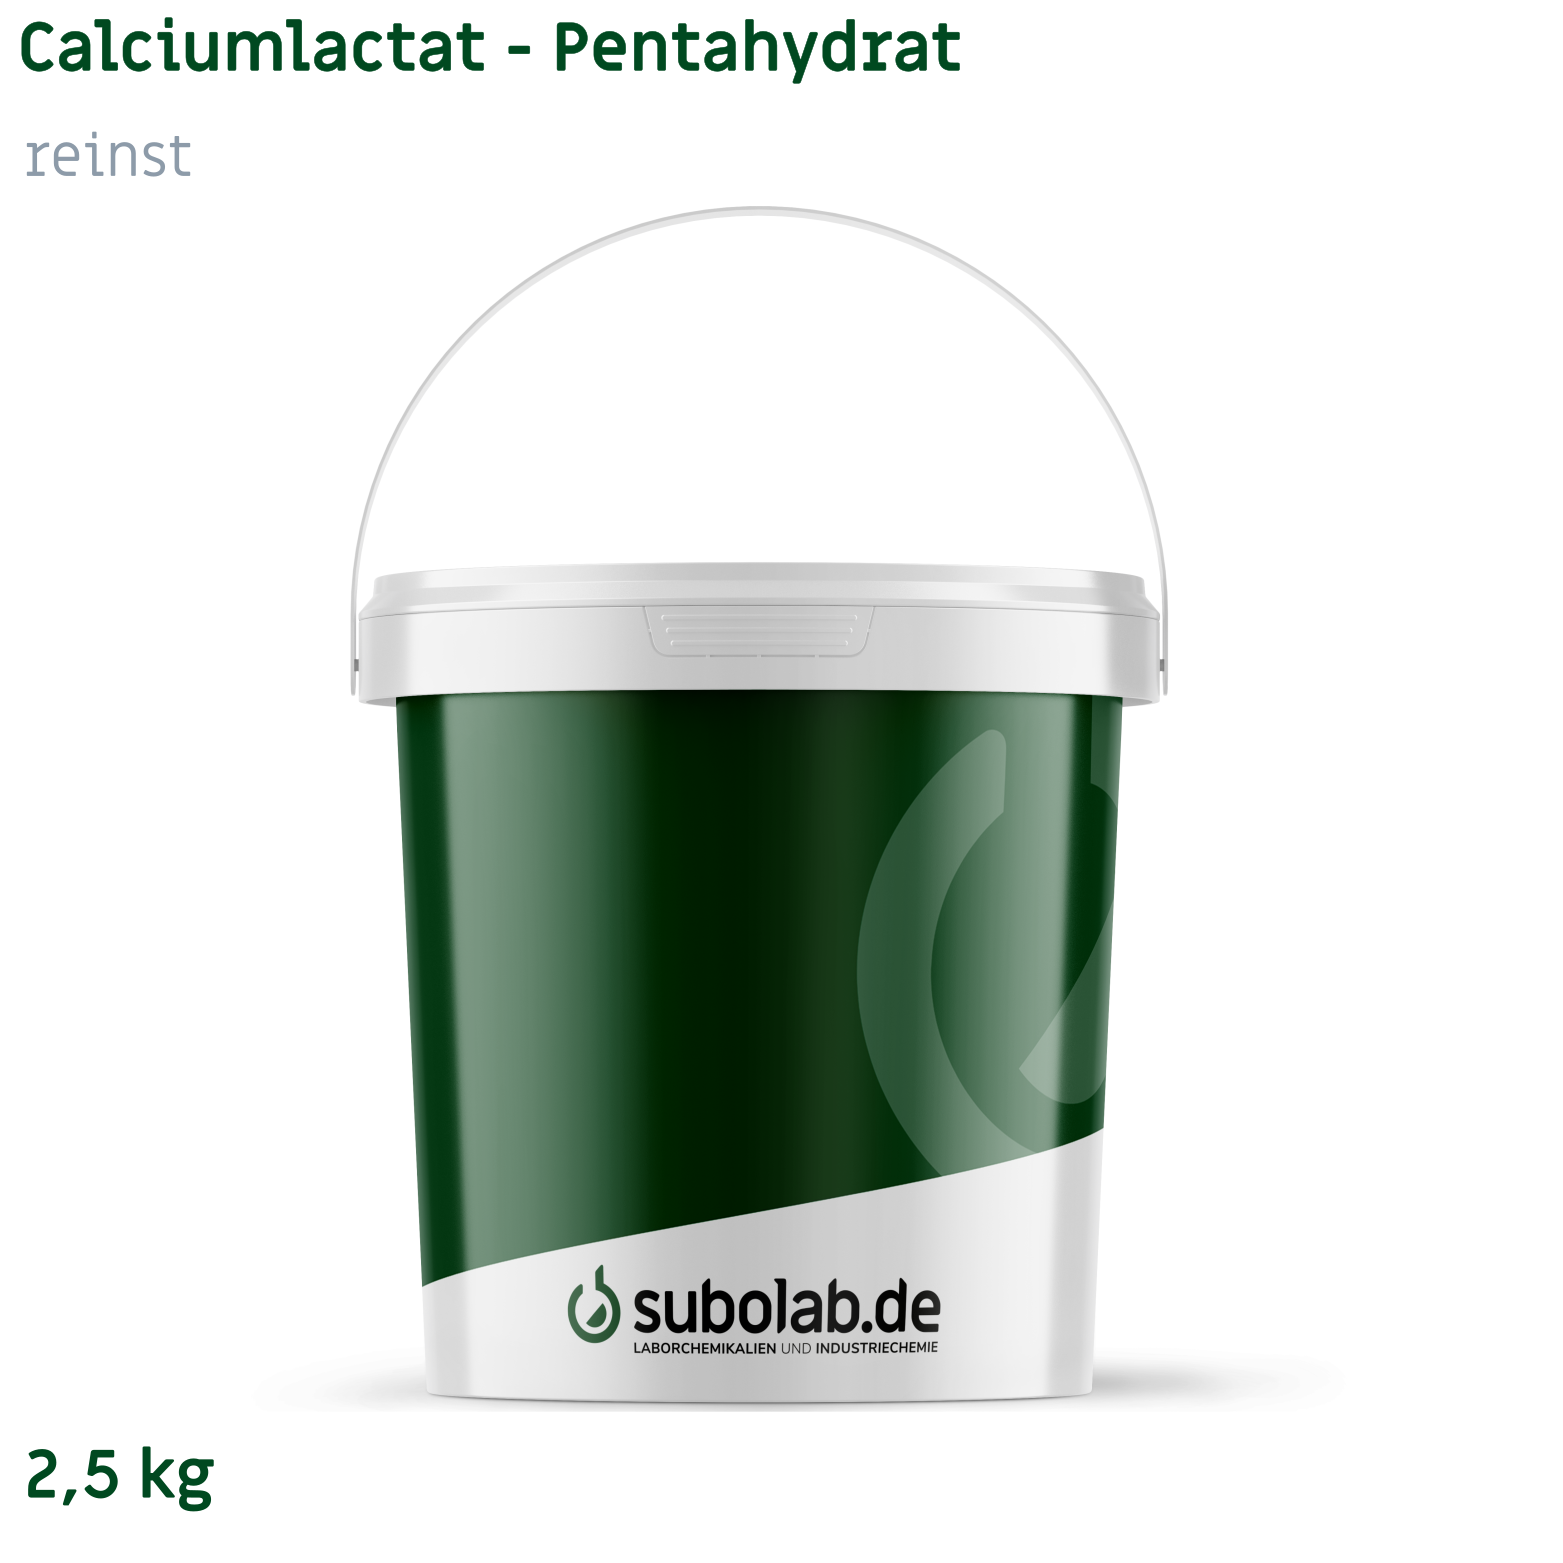 Bild von Calciumlactat - Pentahydrat reinst (2,5 kg)